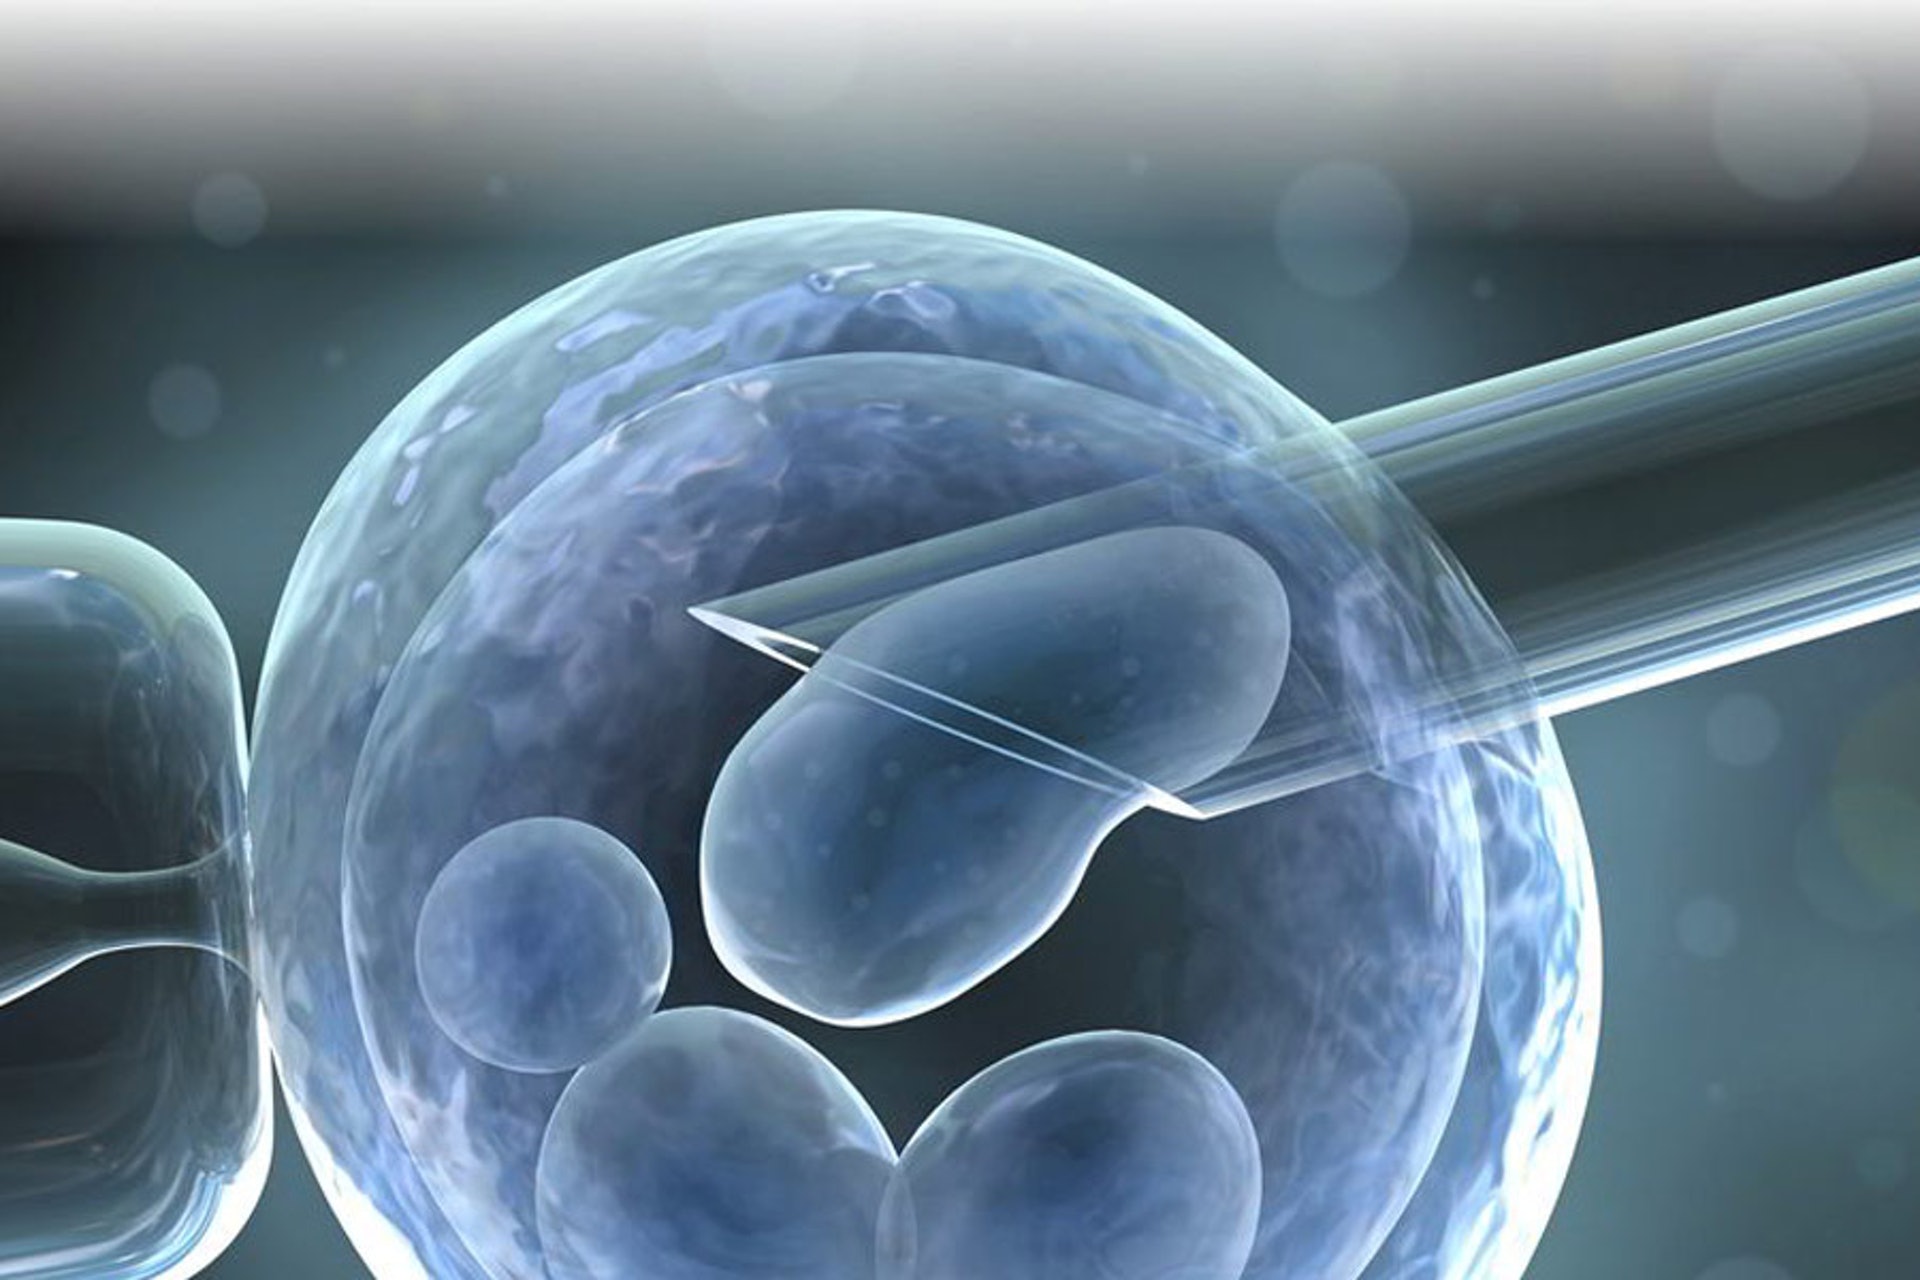 PGT-A 用於檢測胚胎的染色體是否正常，過程會從細胞層當中抽取三至四個細胞，然後分析當中的染色體。（圖片：reproductivehealthgroup）